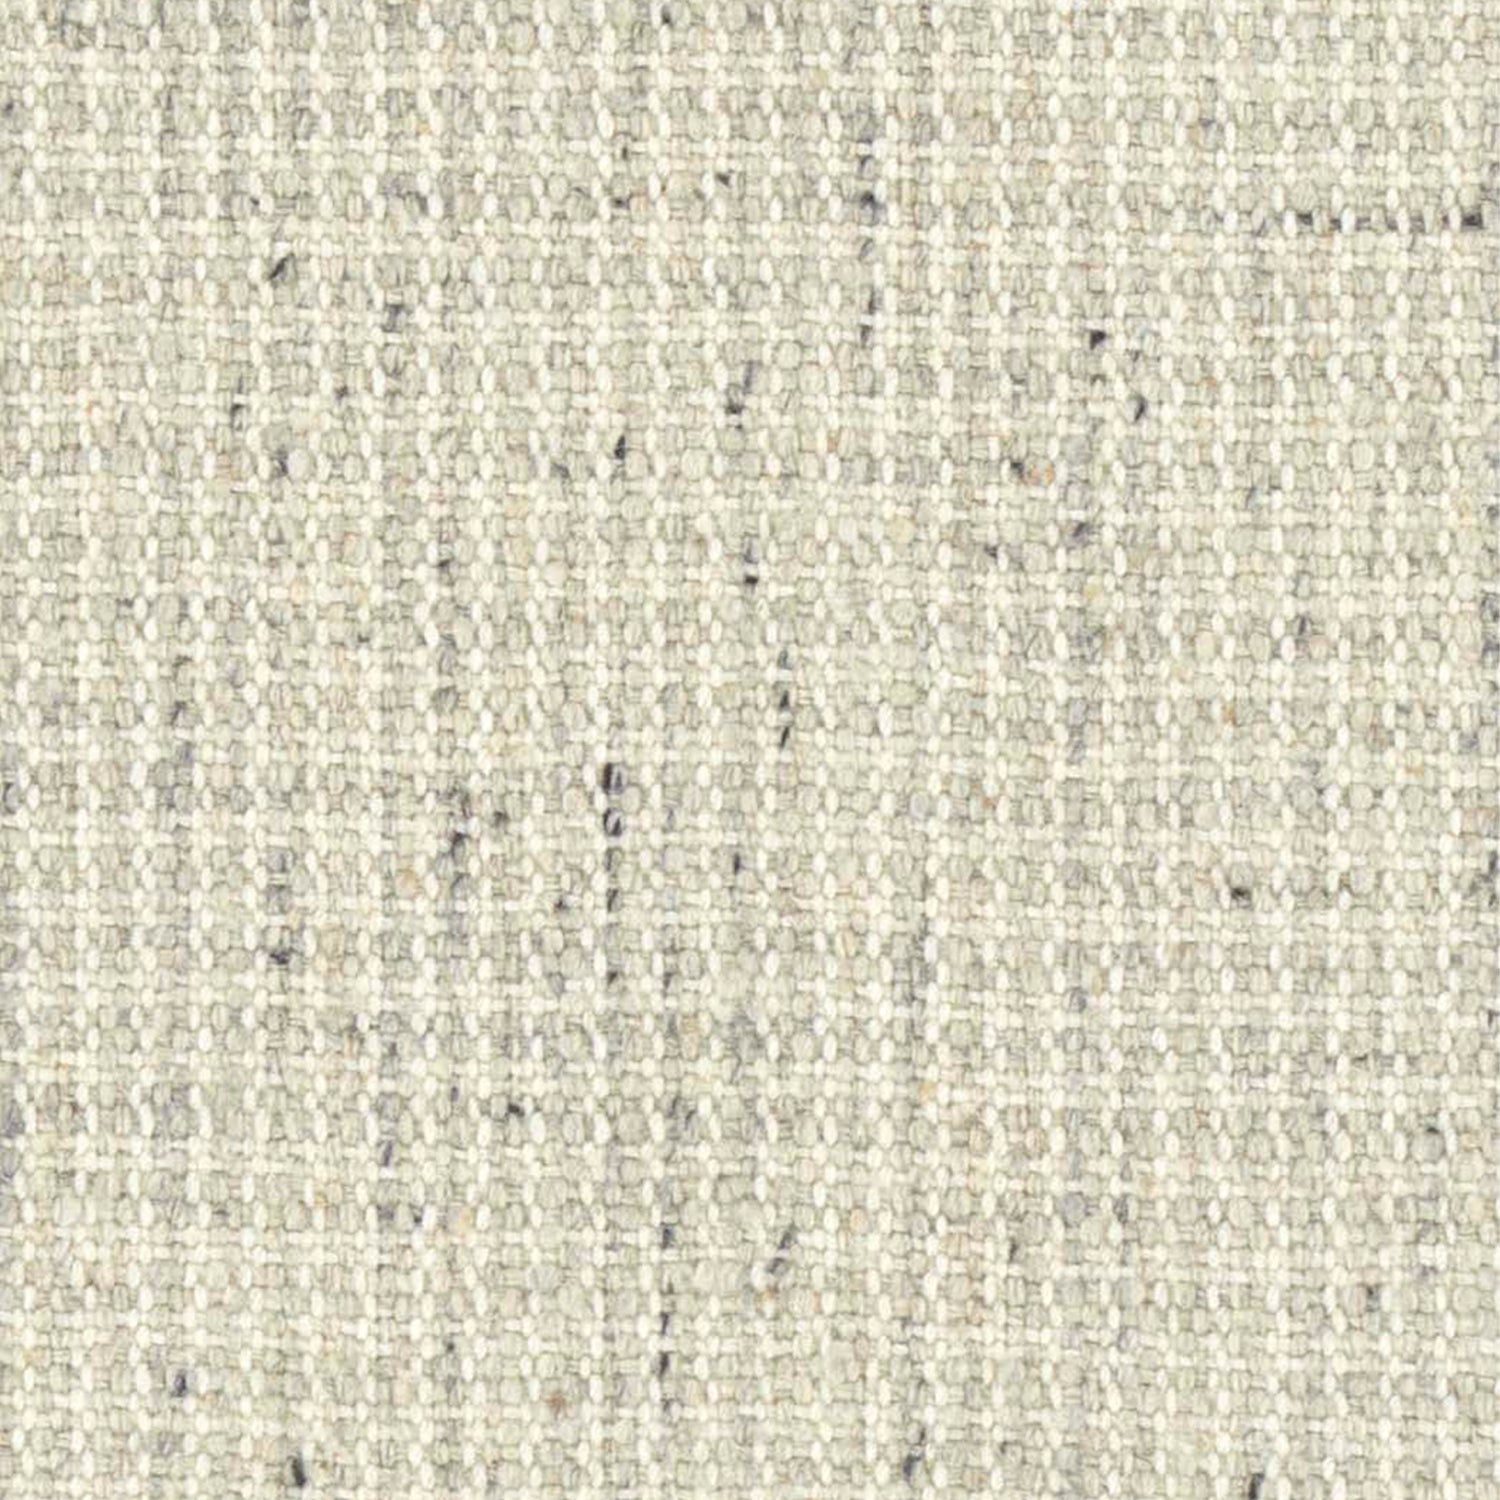 Wool broadloom carpet swatch in a chunky tweed weave in mottled white and greige.